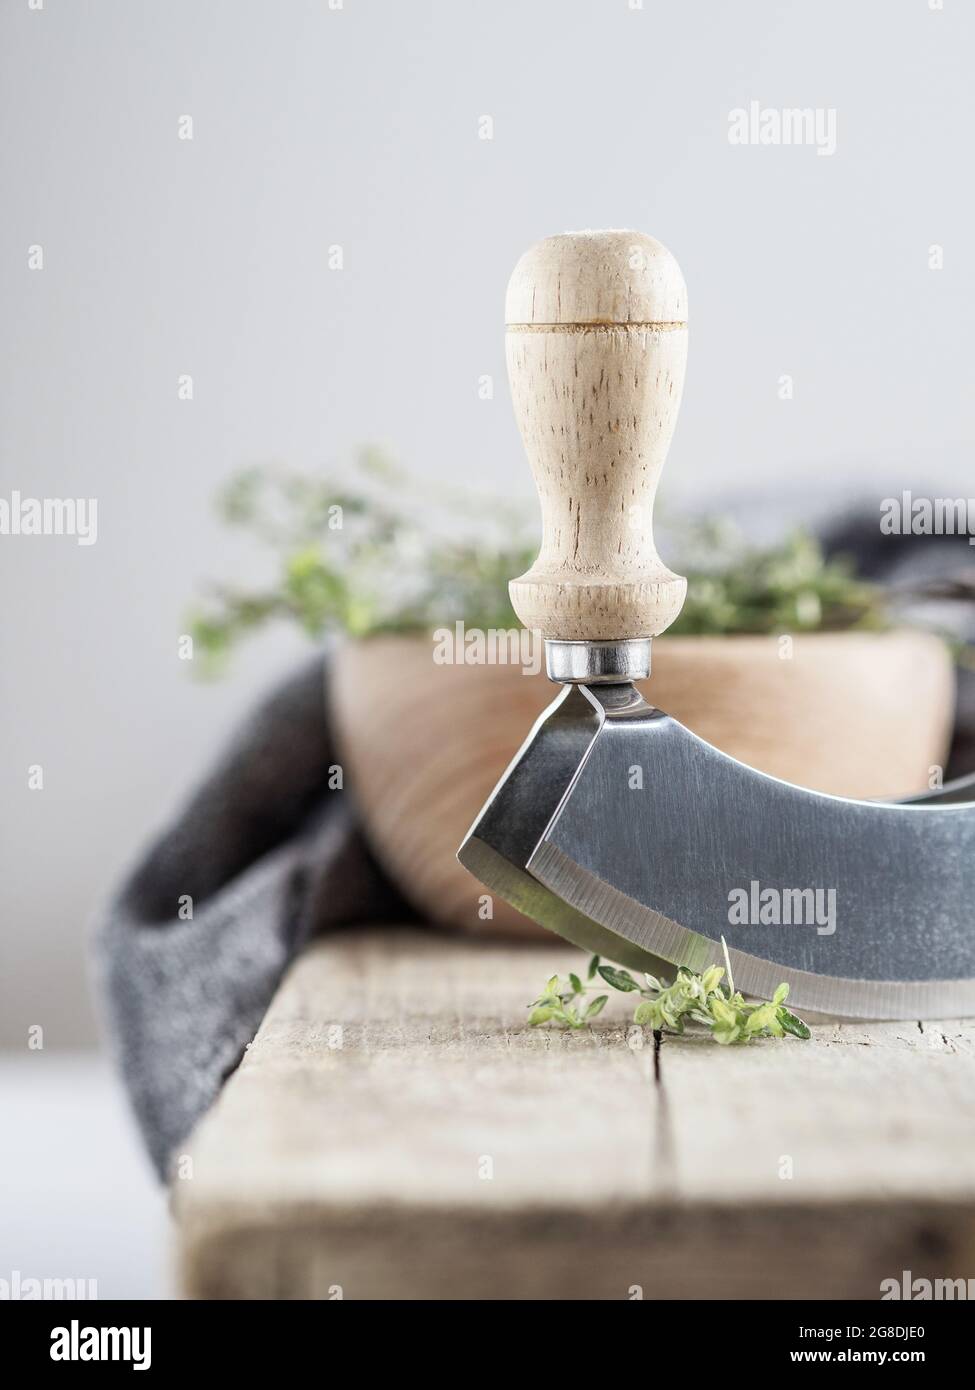 https://c8.alamy.com/comp/2G8DJE0/fresh-green-thyme-thymus-vulgaris-with-herb-chopper-knife-on-vintage-wooden-table-copy-space-2G8DJE0.jpg